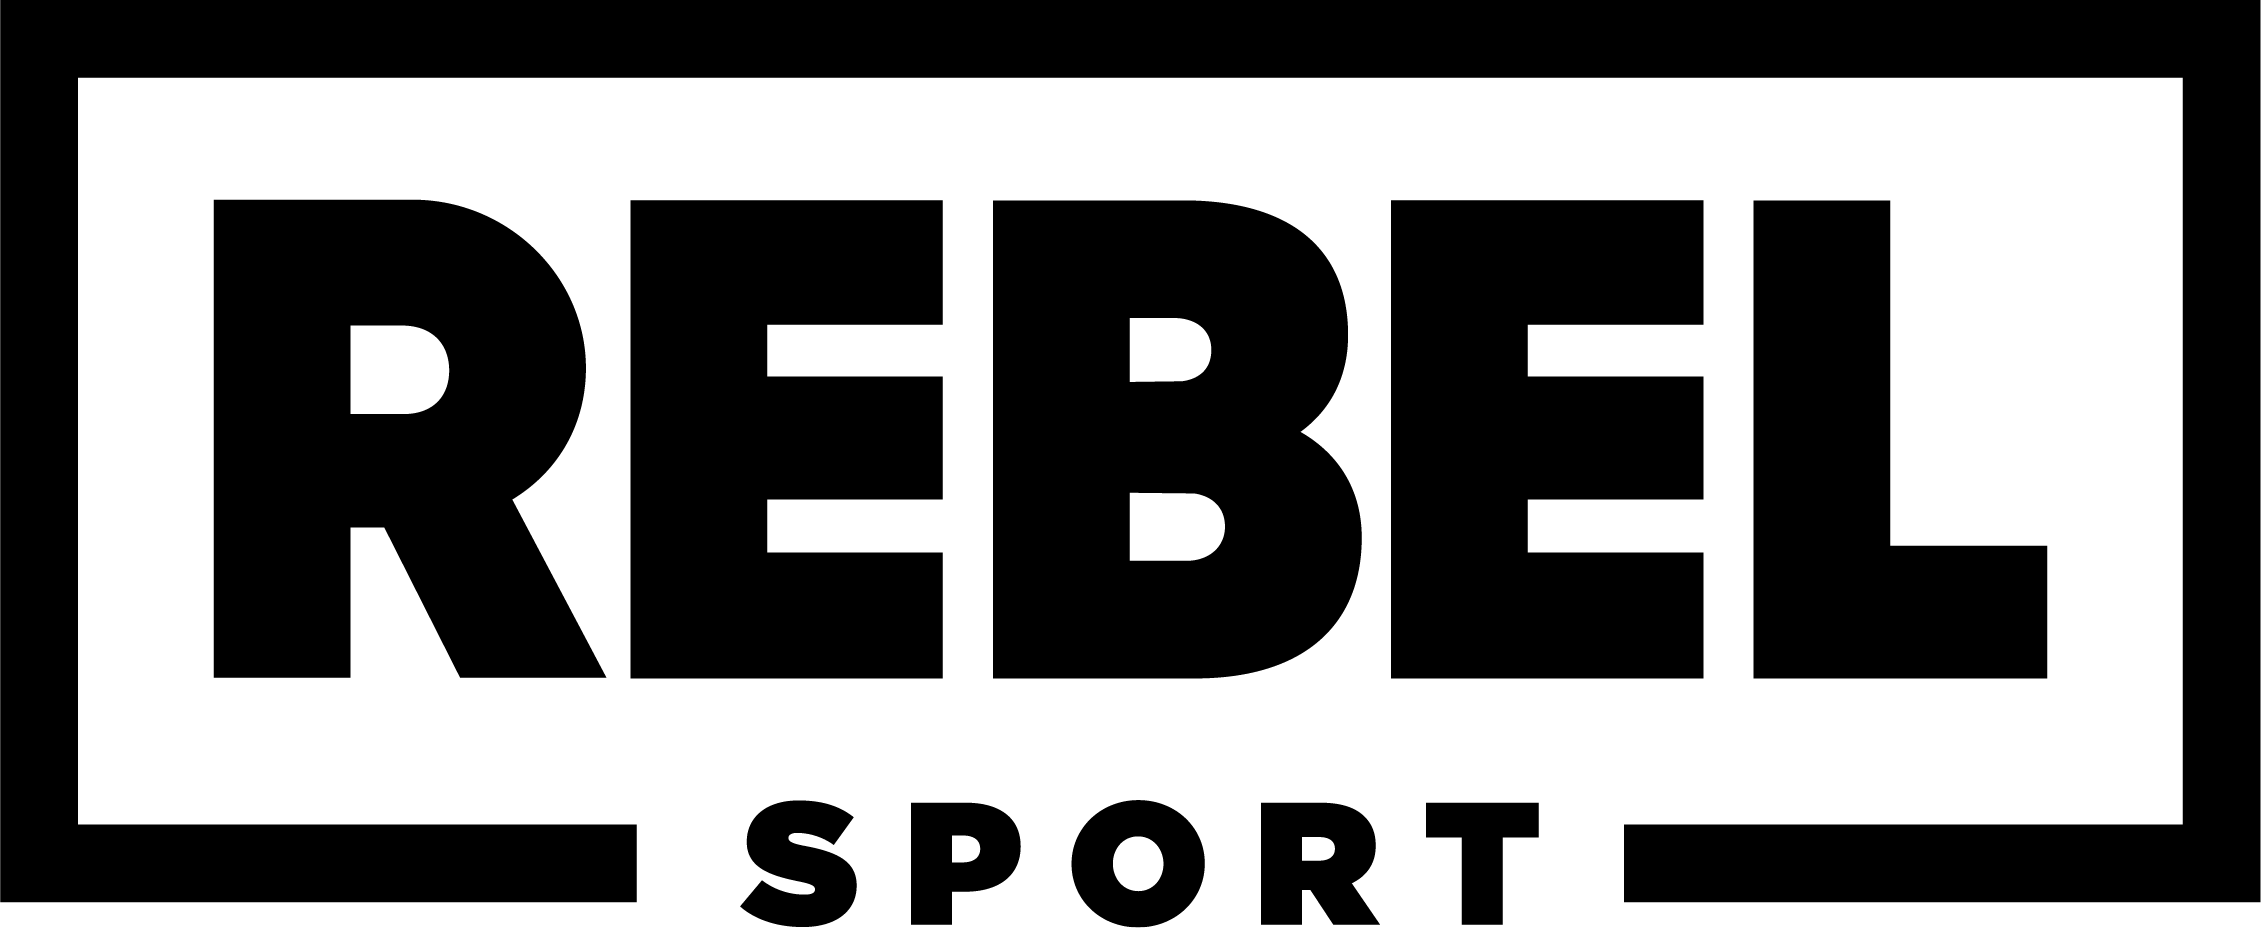 rebel sport trainers